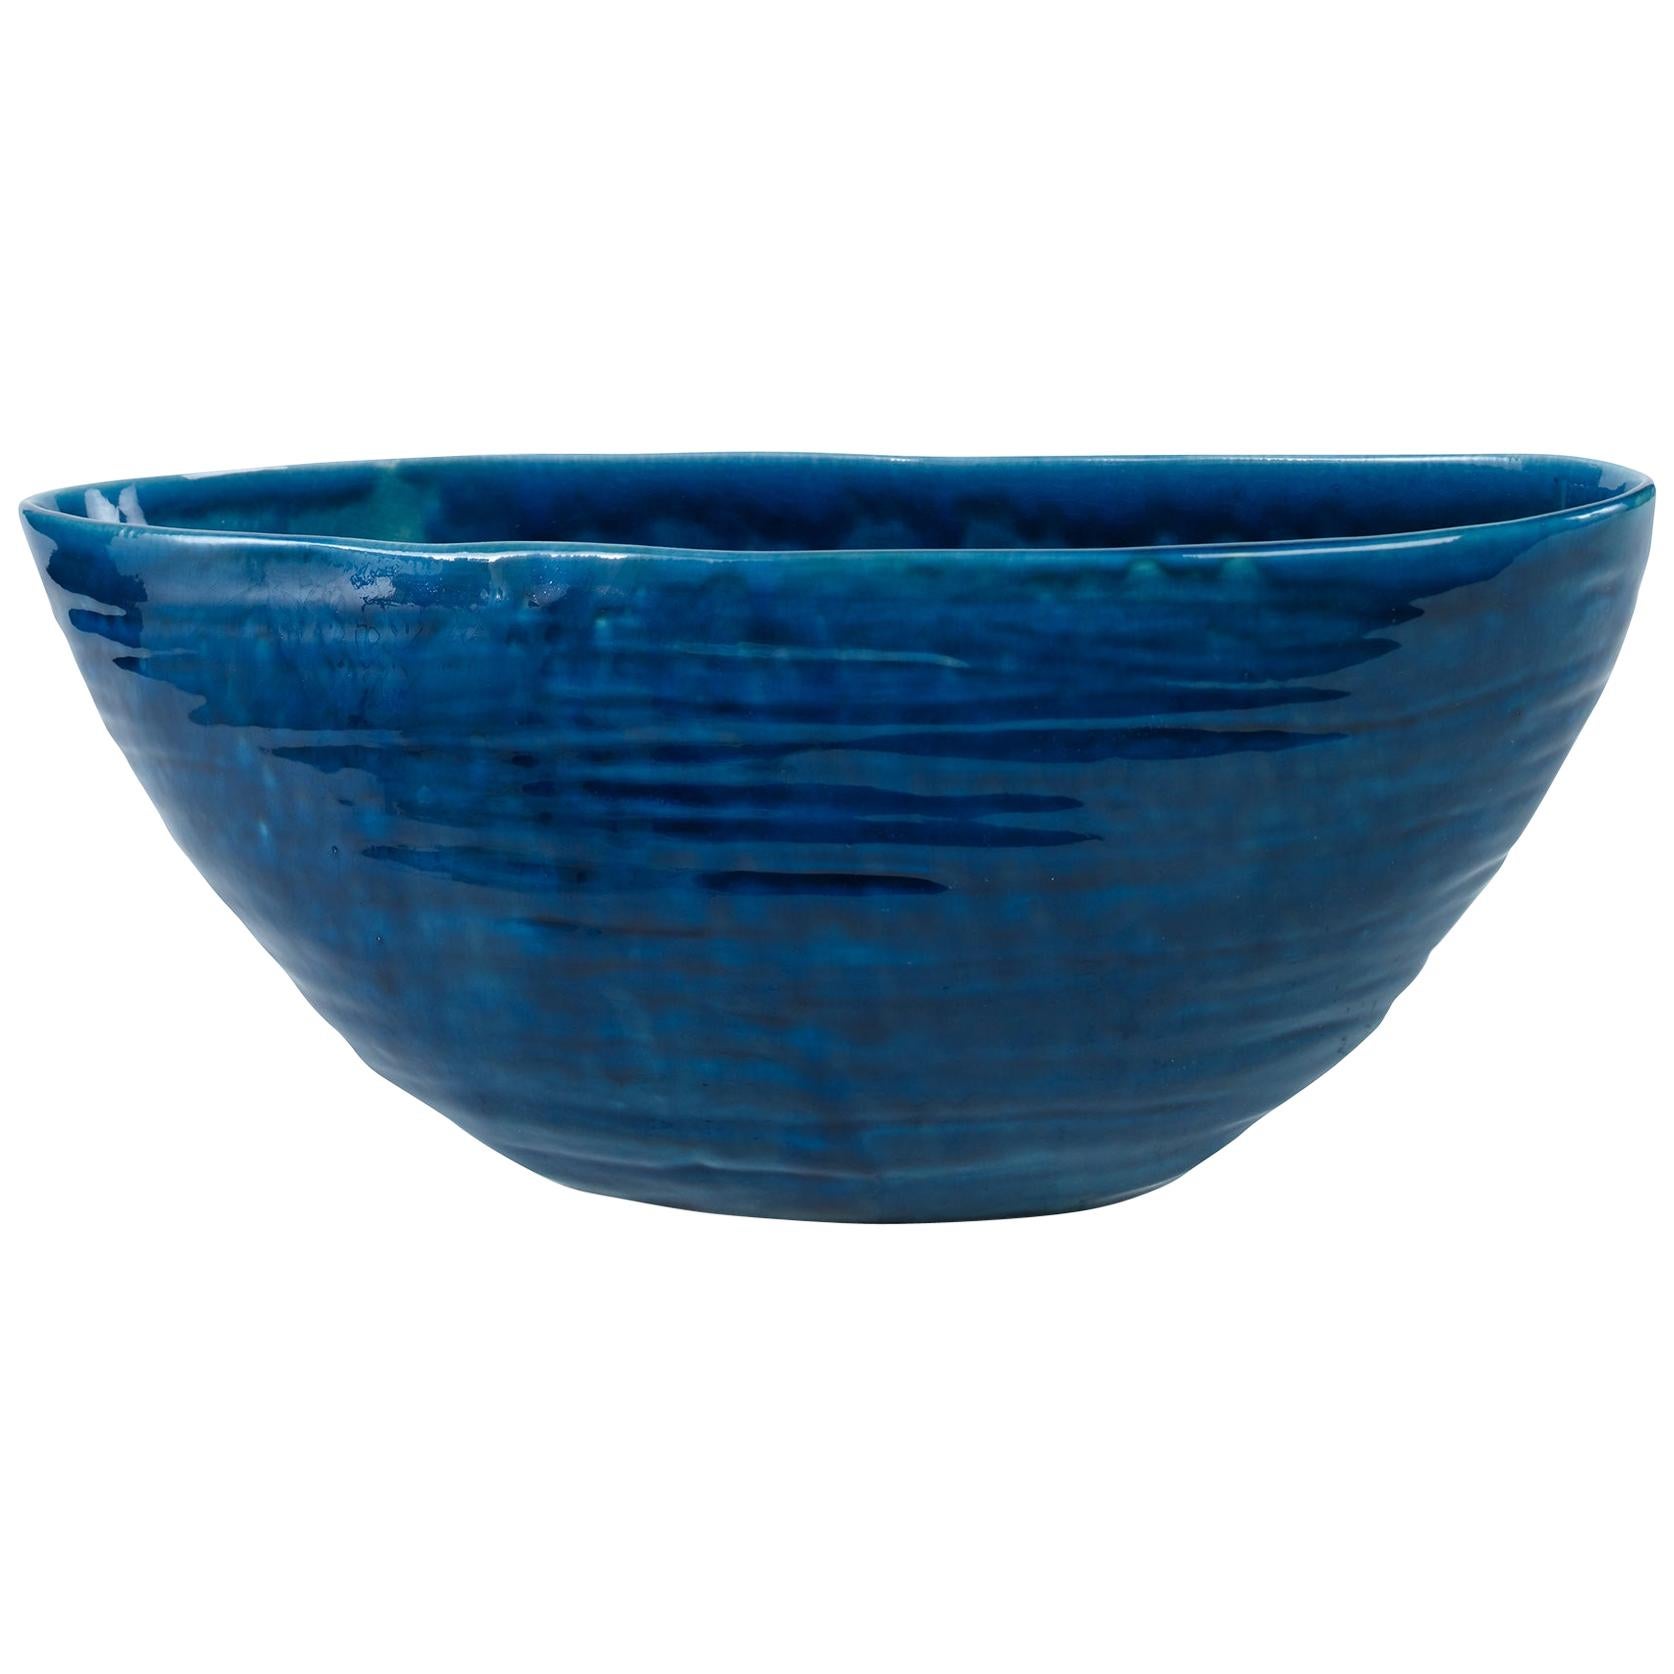 Mallard Bowl Ceramic by CuratedKravet